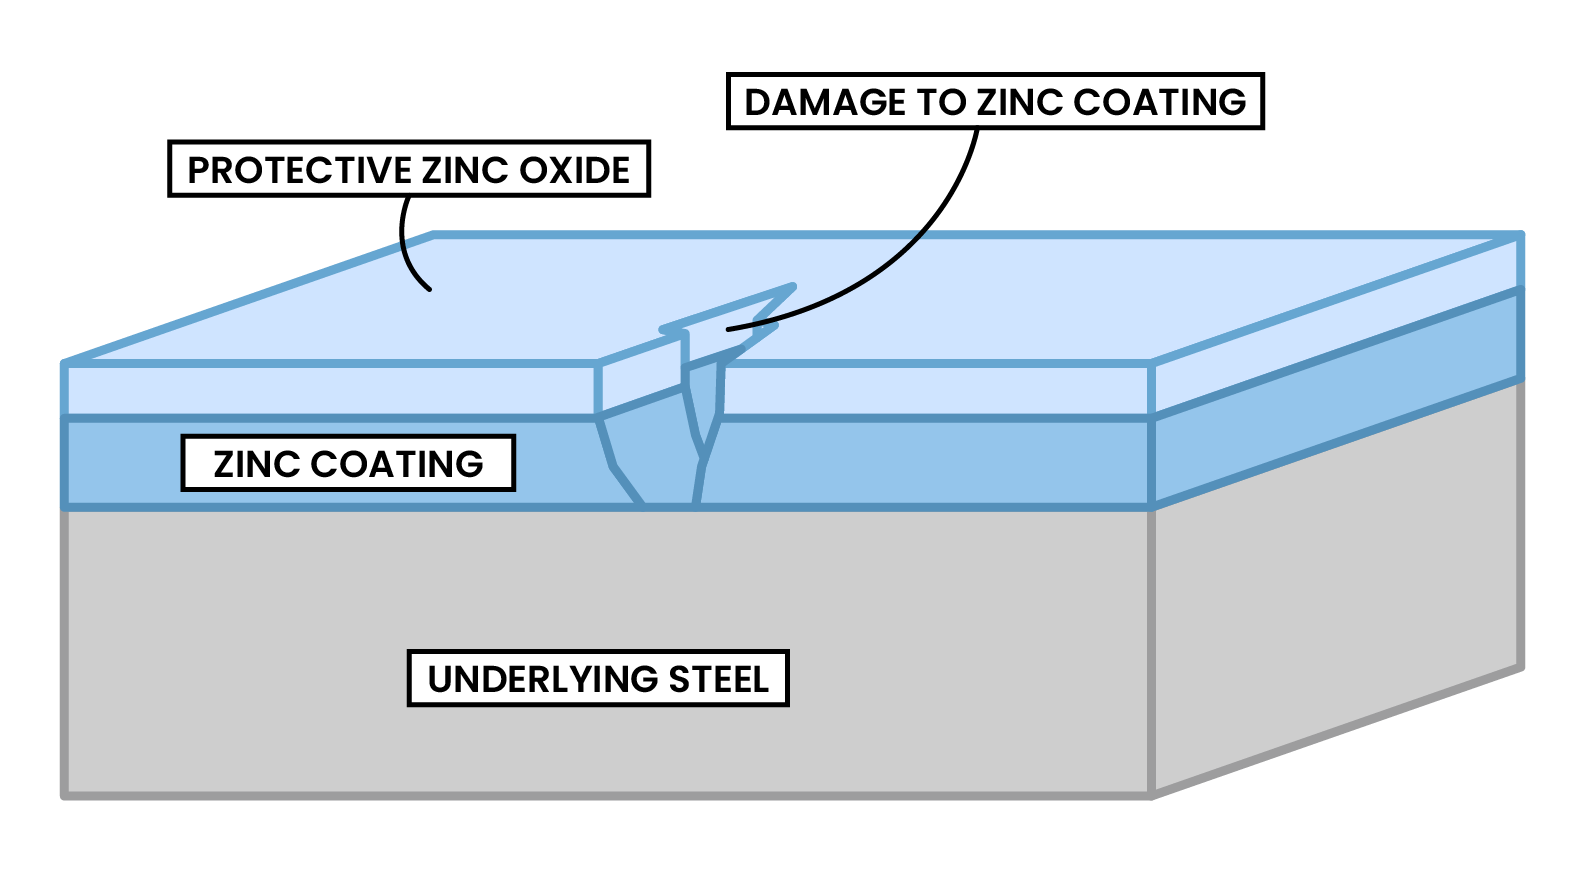 edexcel_igcse_chemistry_topic 13_reactivity series_003_galvanisation of metals as sacrificial protection zinc coating